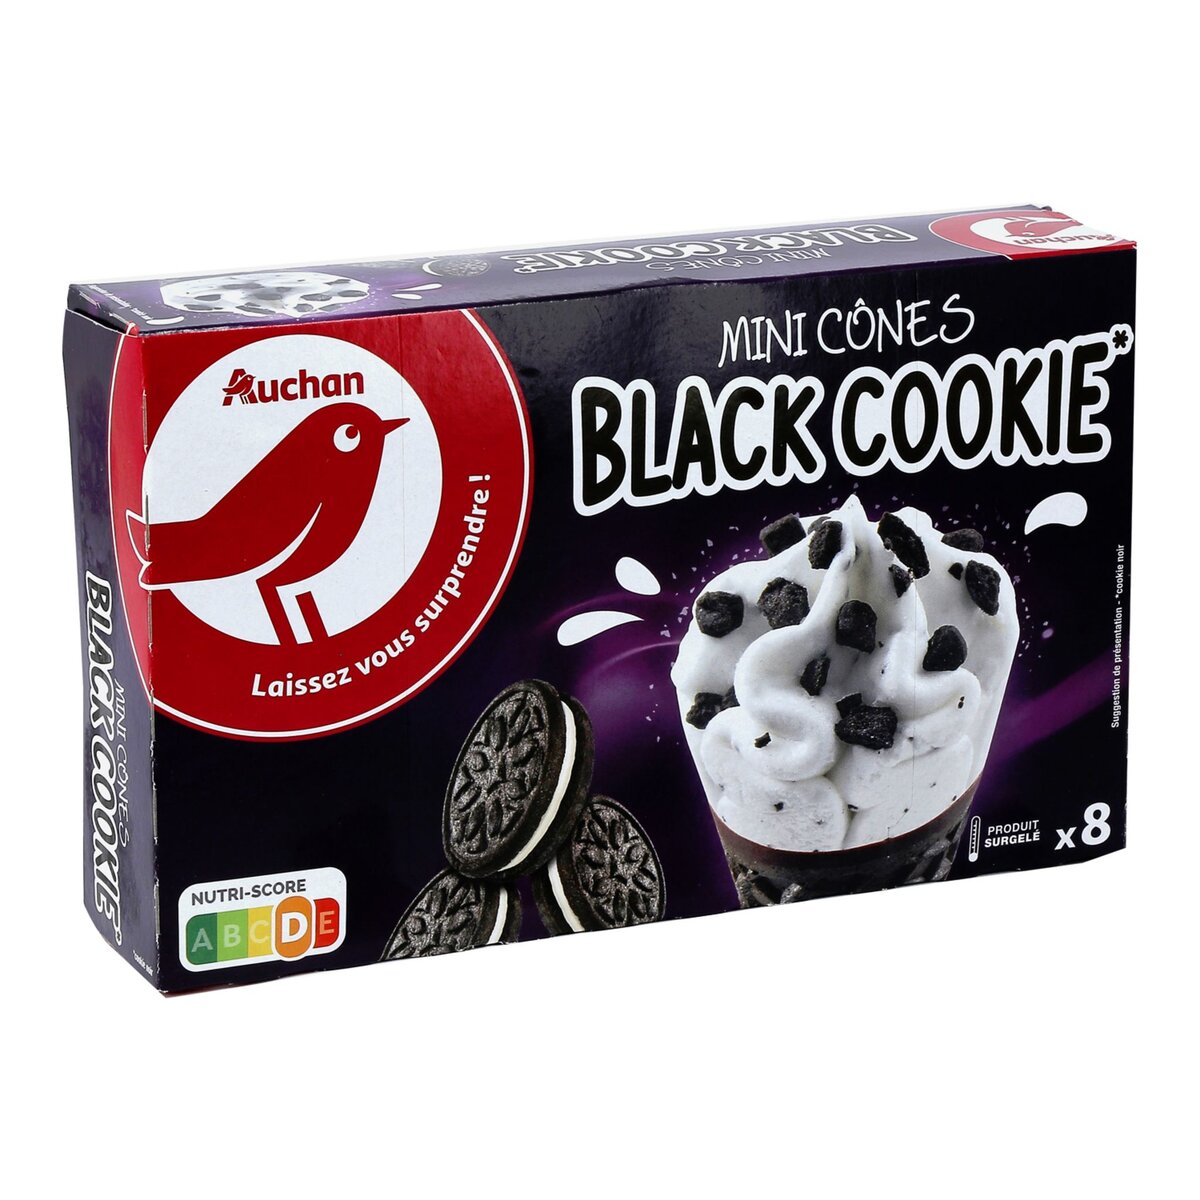 AUCHAN Auchan Mini cône glacé black cookie 400g 8 mini cônes 400g